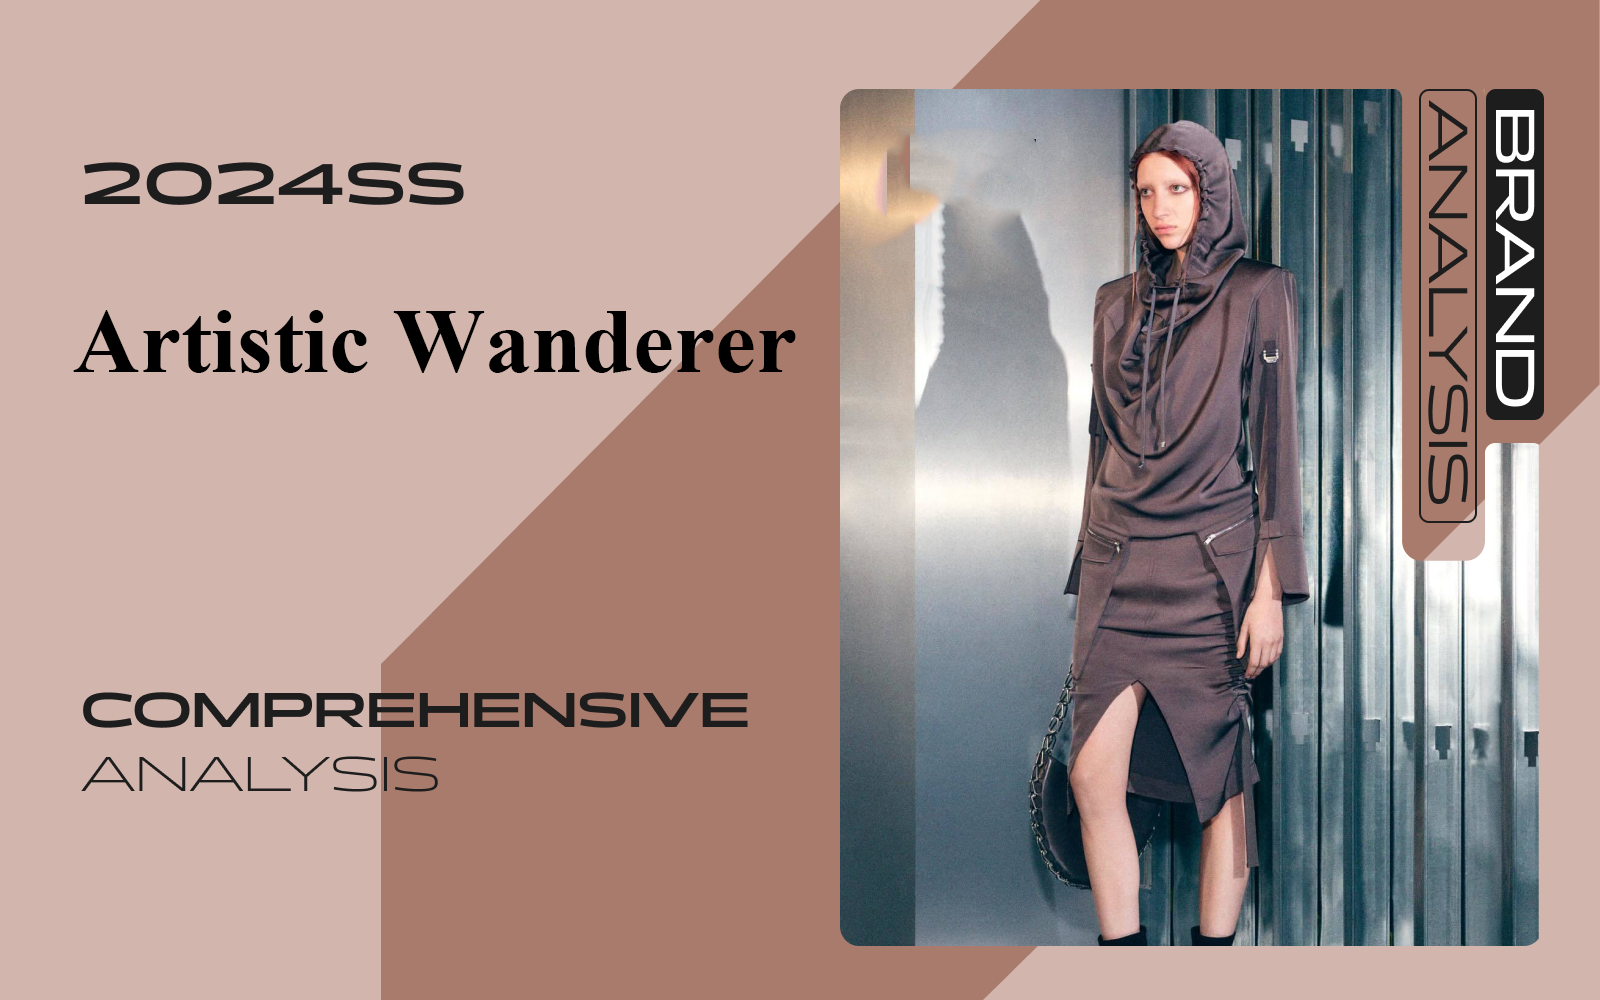 Artistic Wanderer -- The Comprehensive Analysis of Women's Fashion Designer Brands